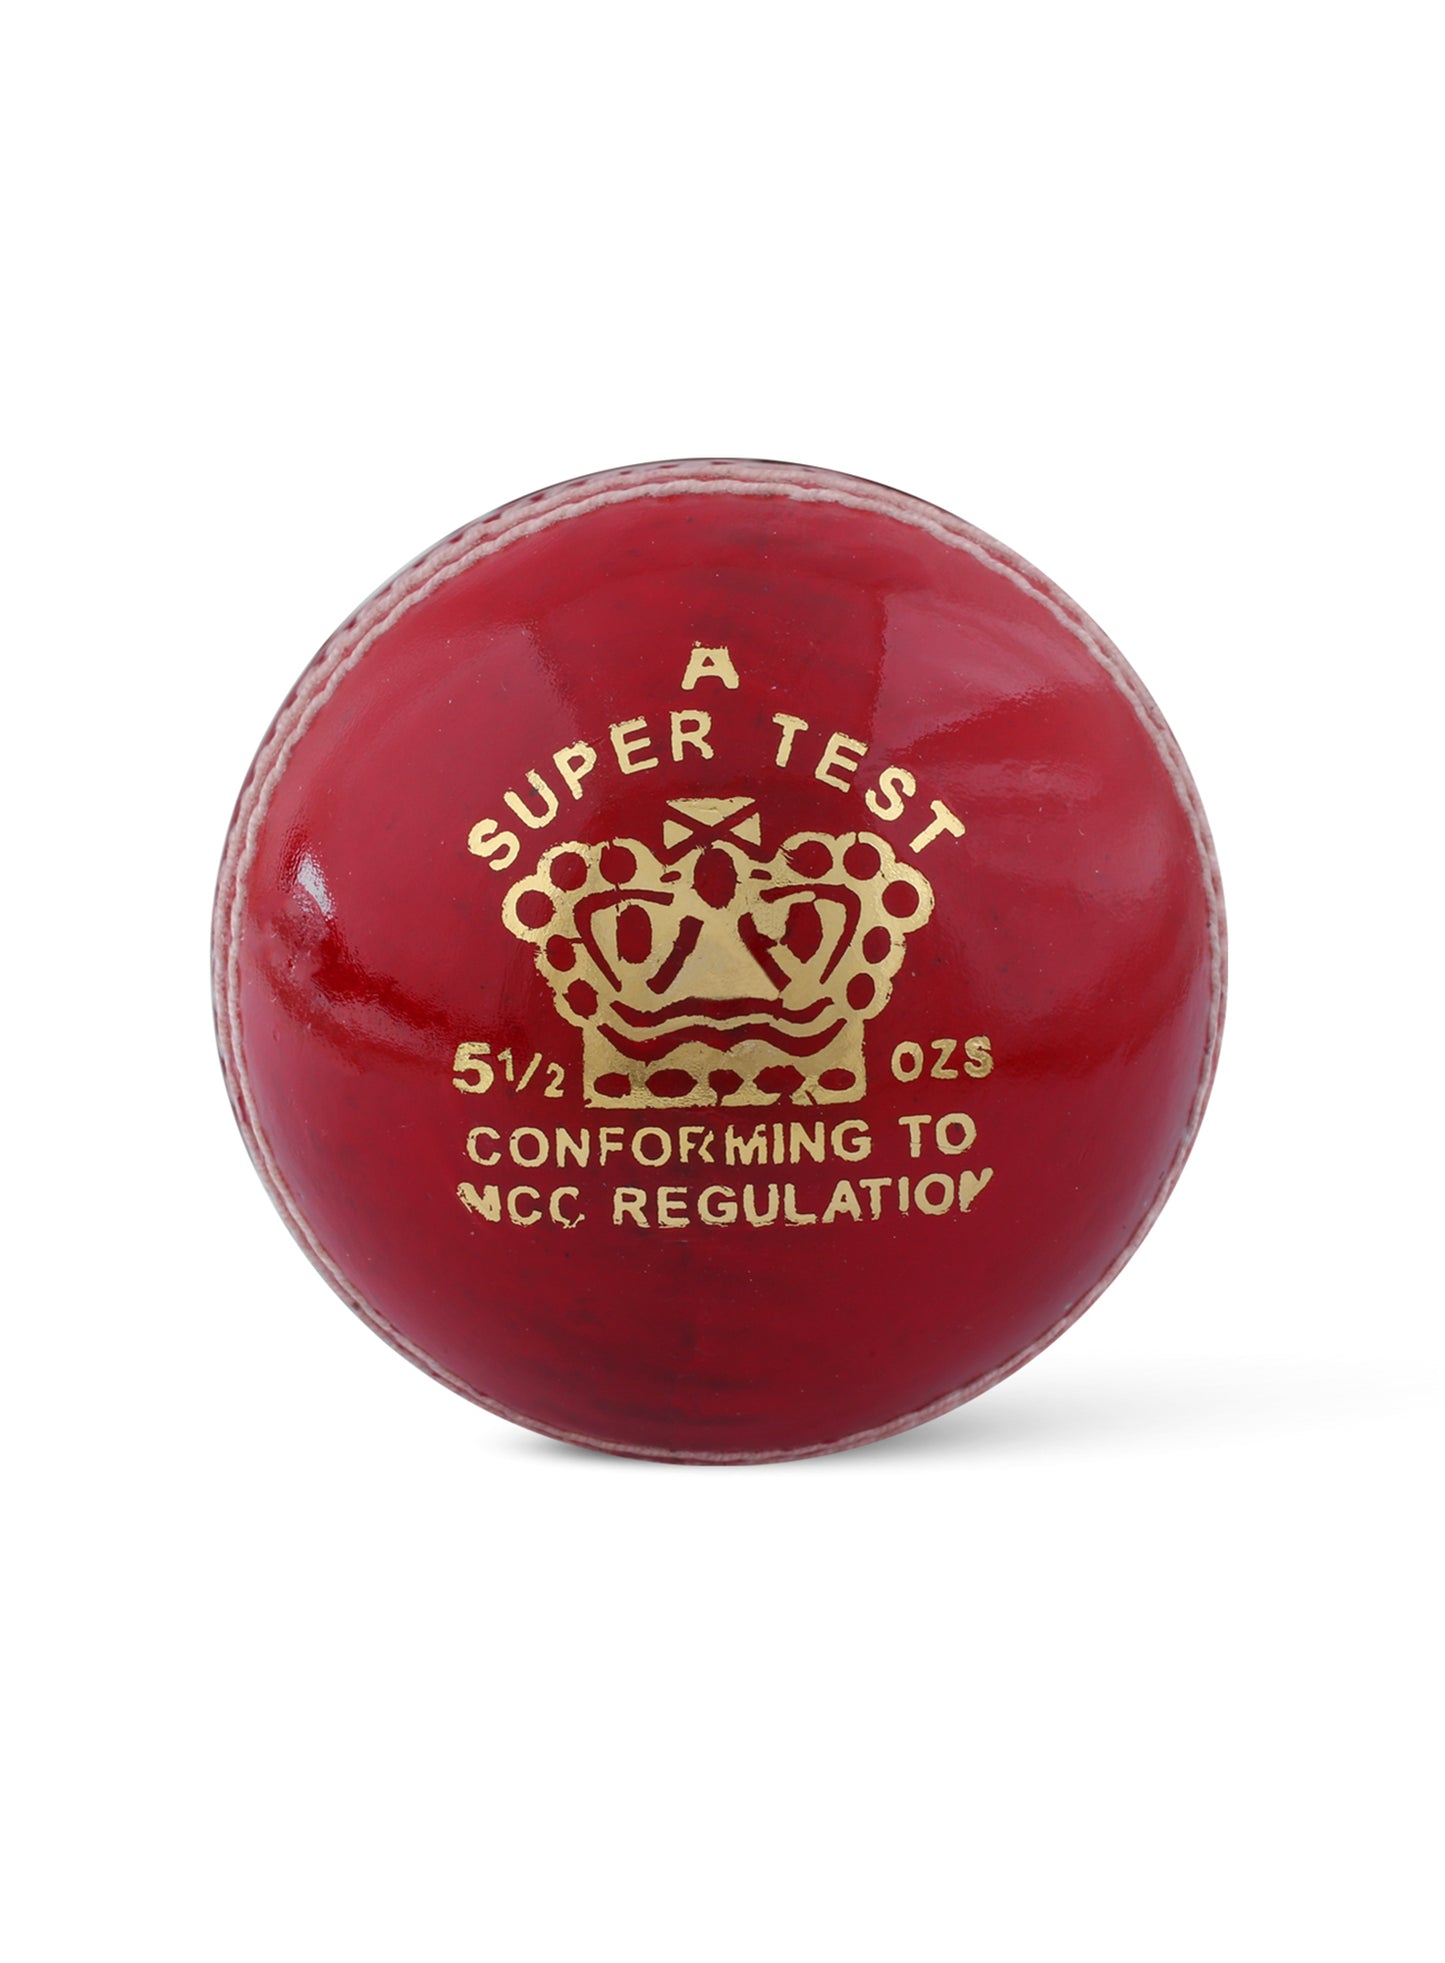 CA Ball Super Test